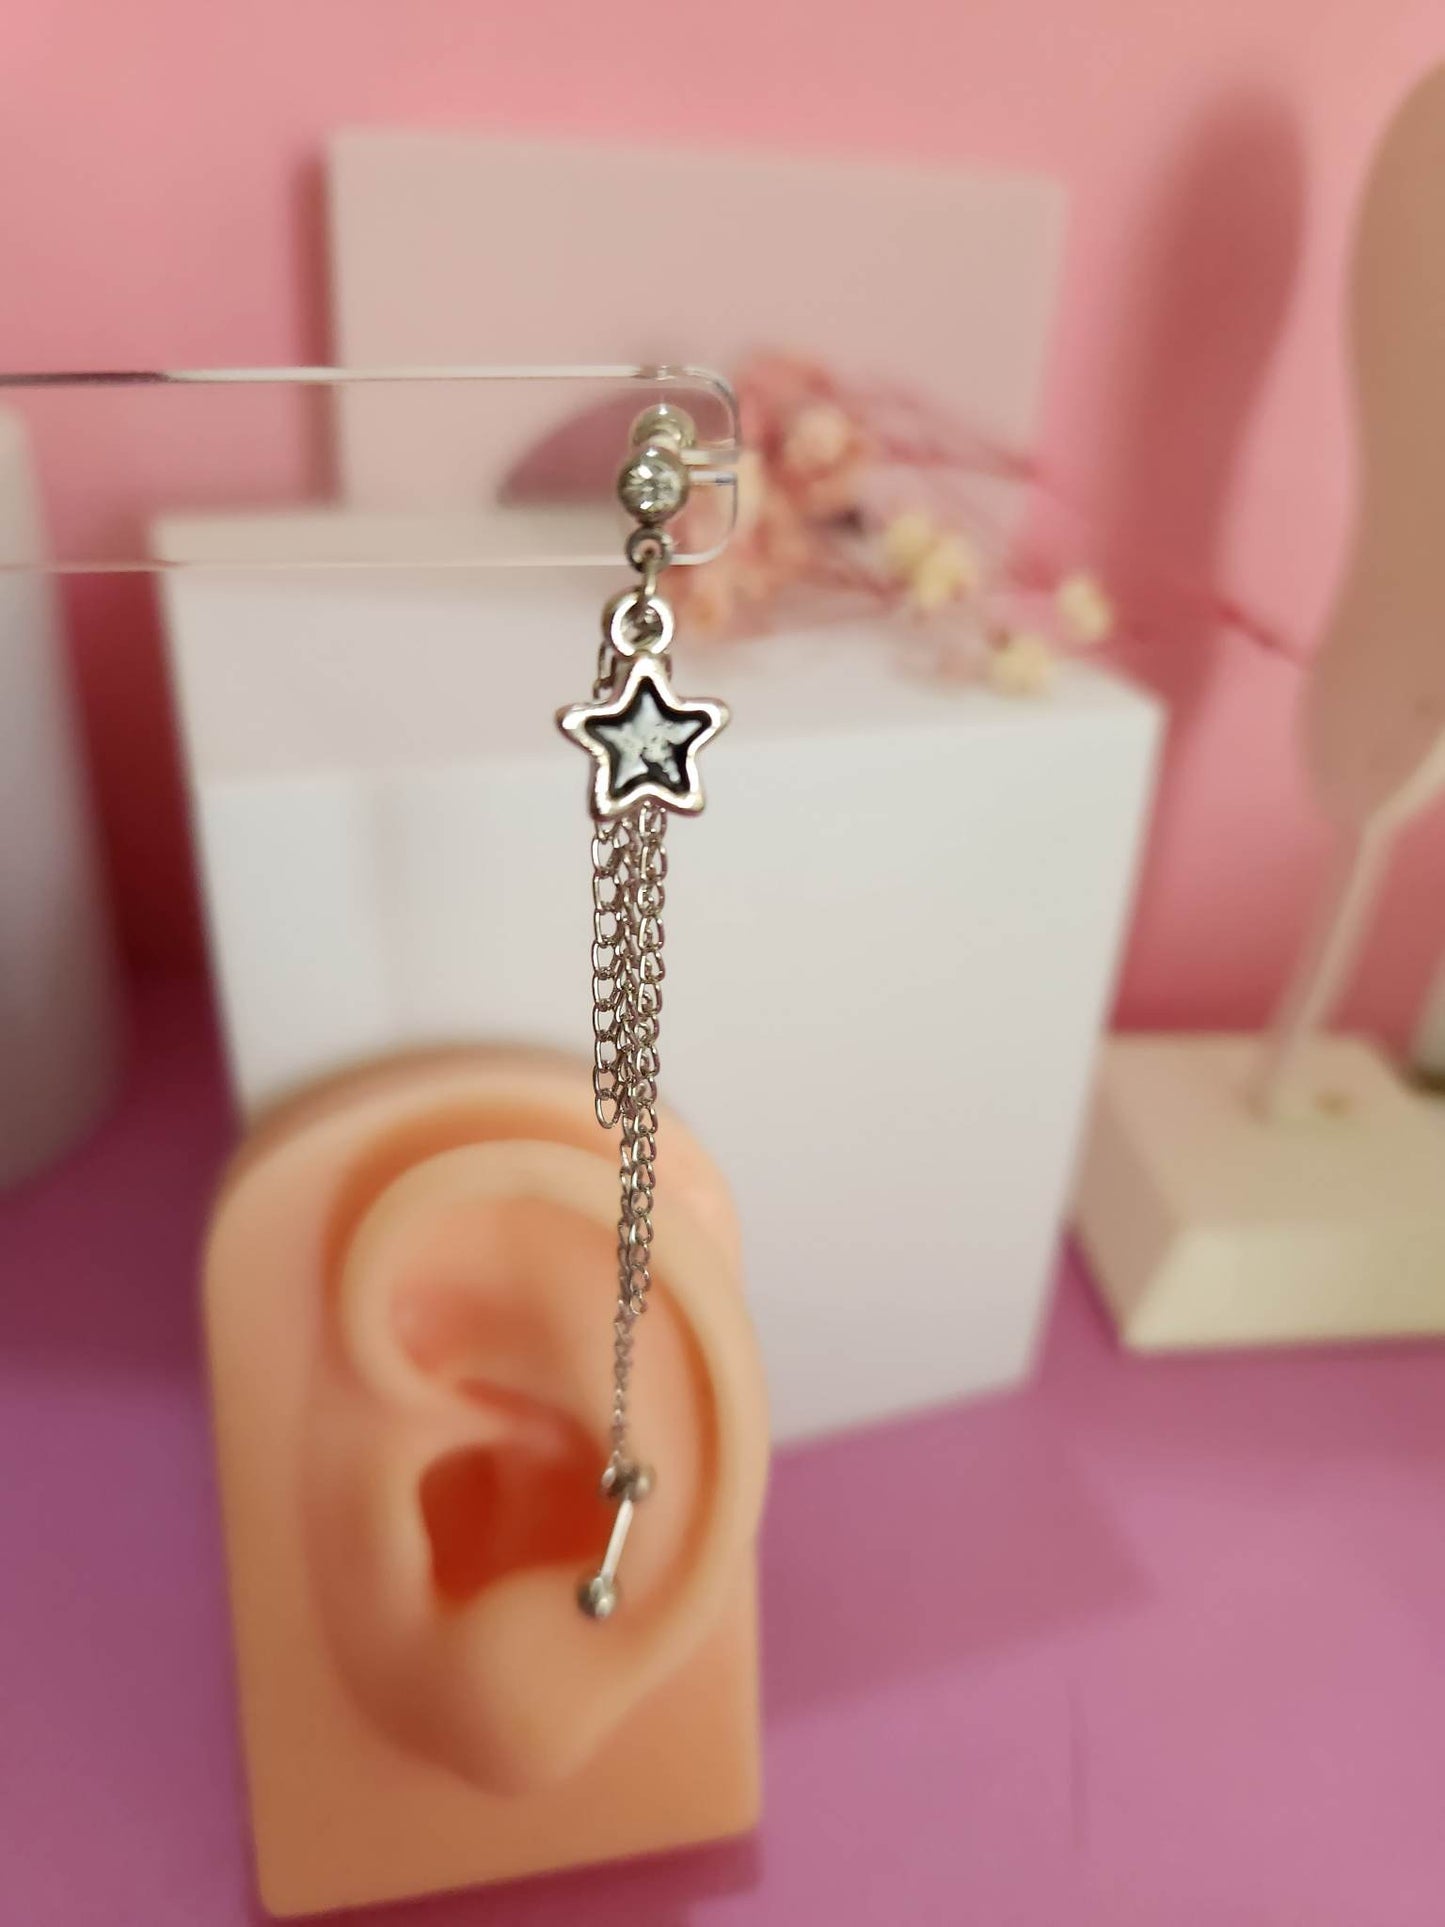 Double Gem Dangle Chain Star Tragus Cartilage Ear Piercing Bars 16g 6mm - Pierced n Proud